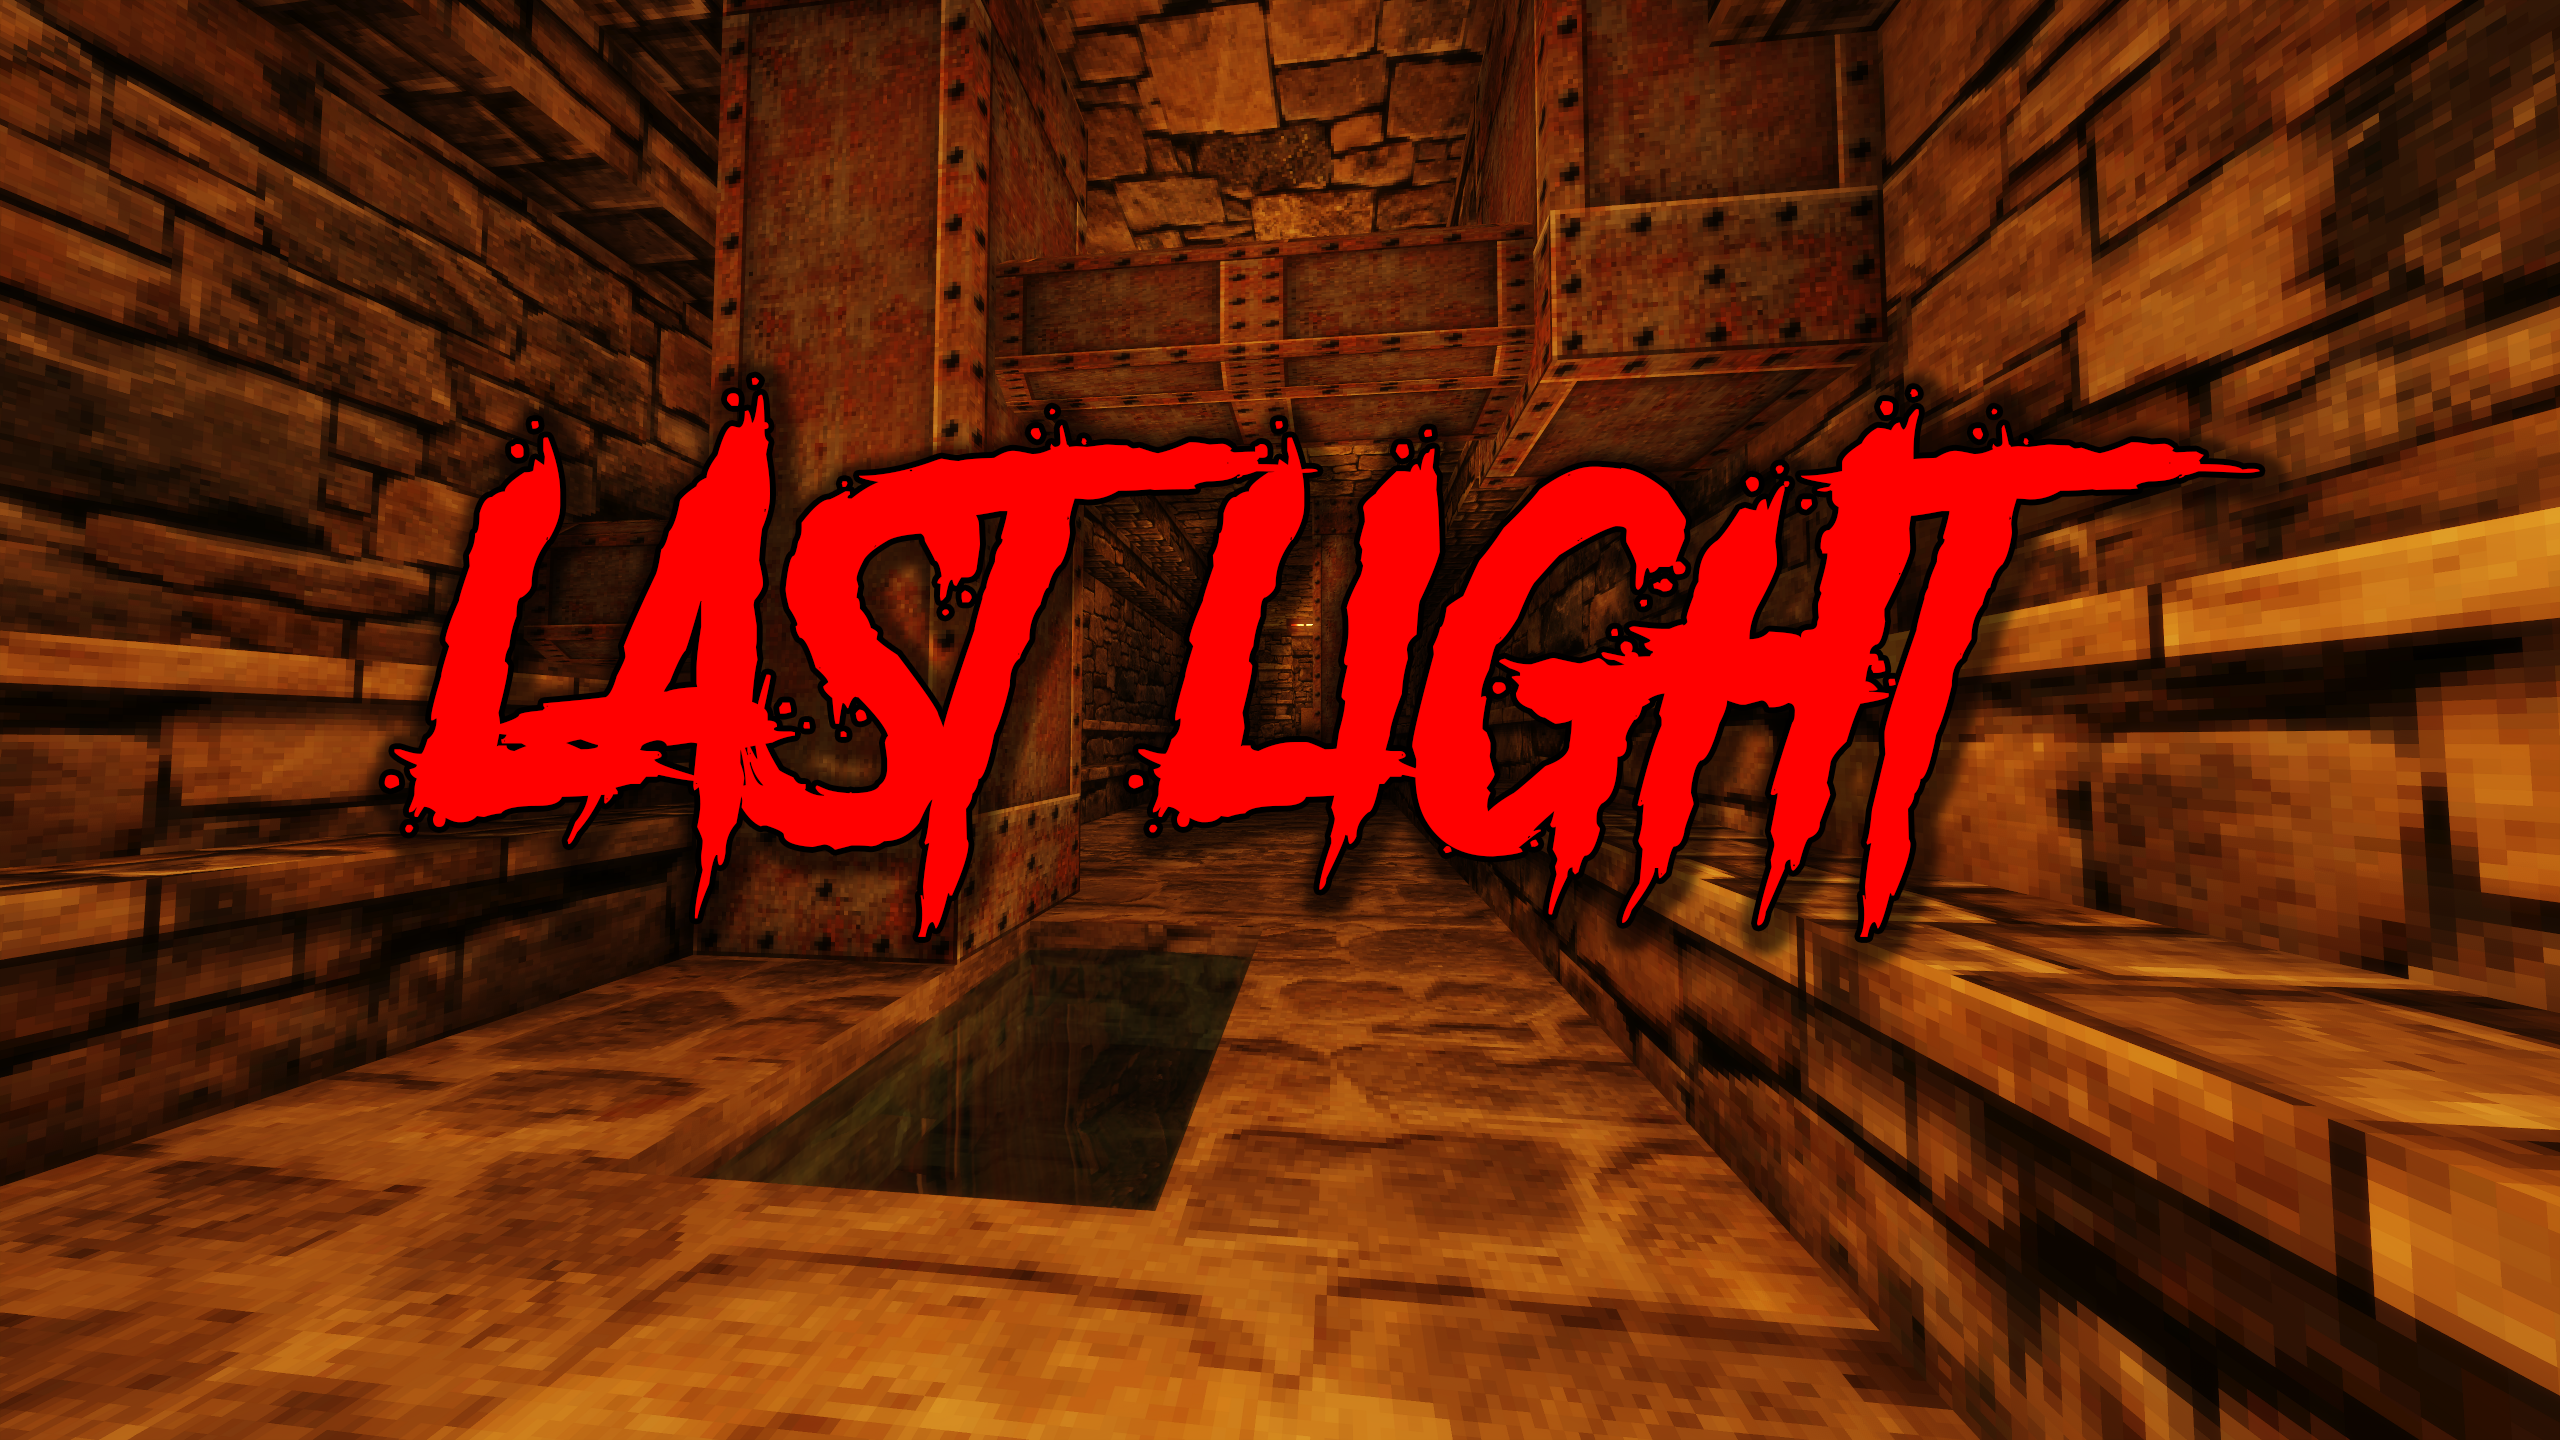 Tải về Last Light 1.0 cho Minecraft 1.20.1